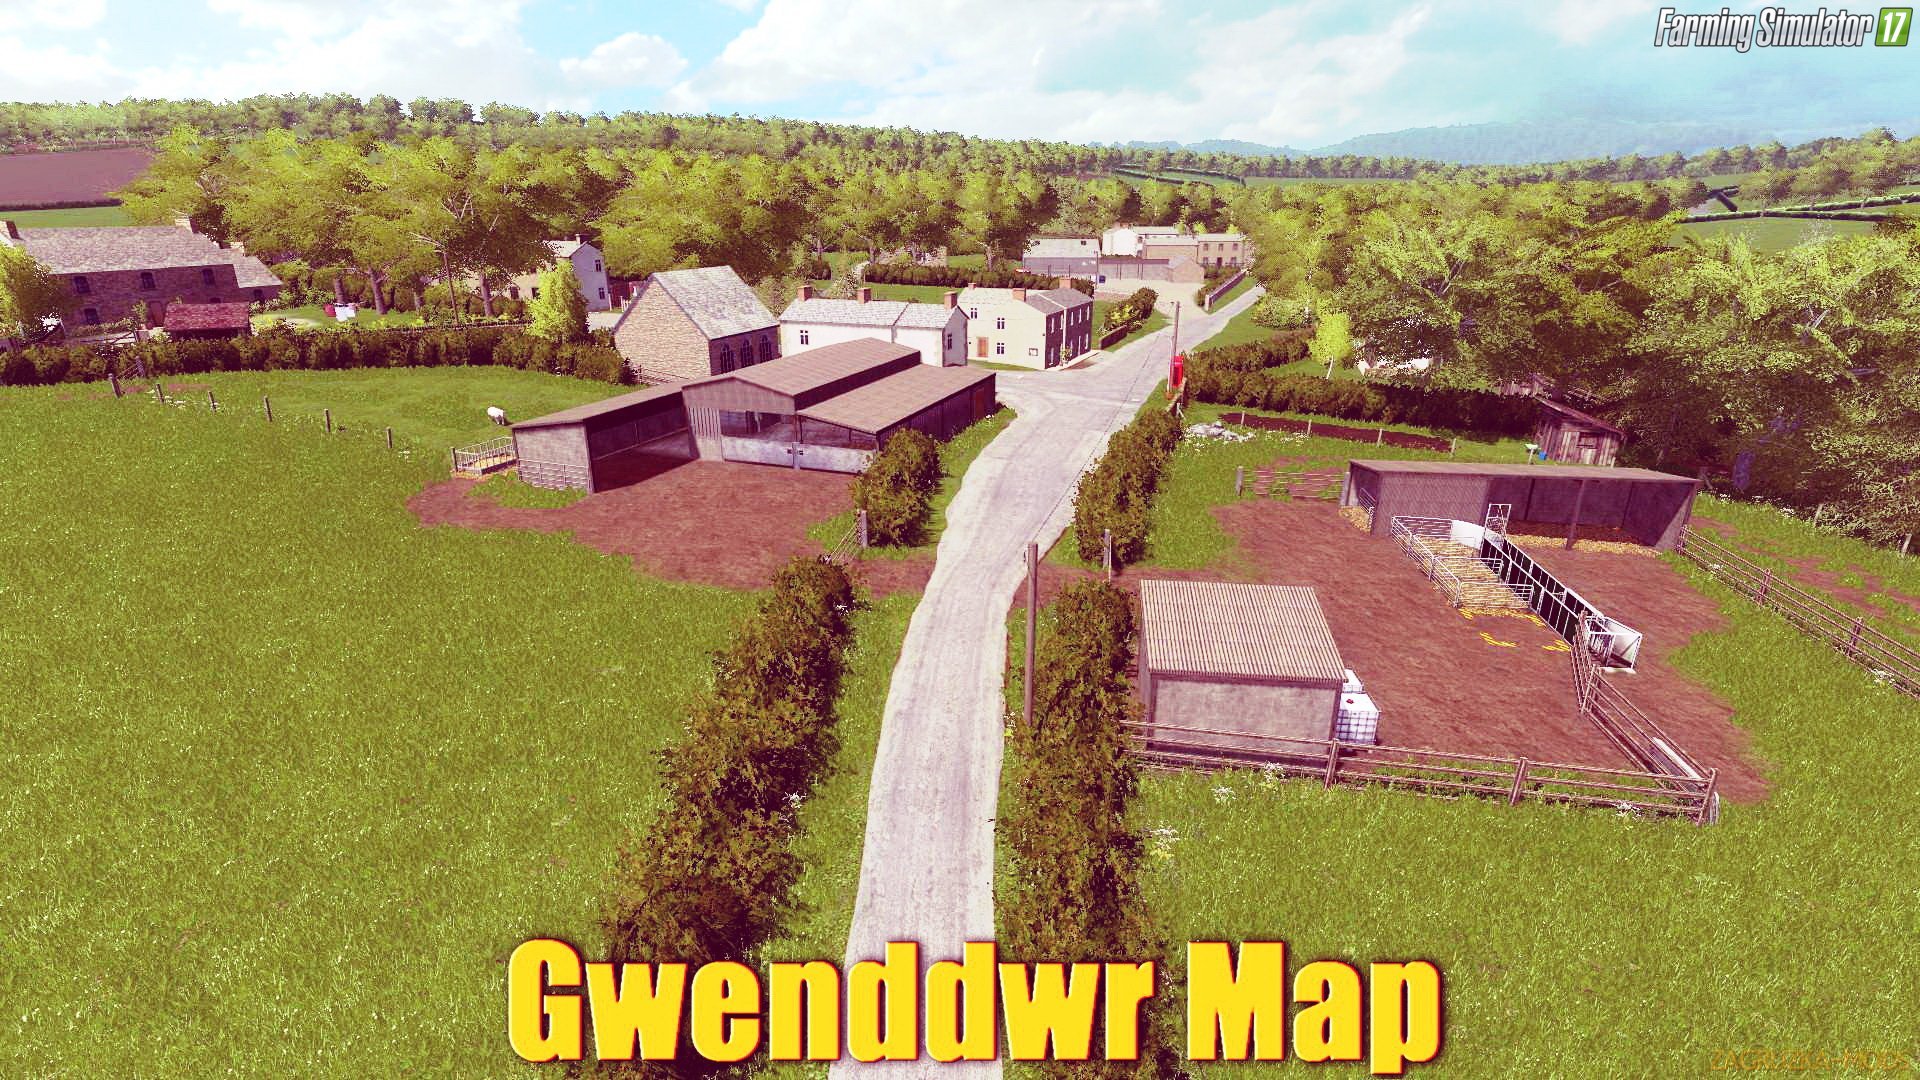 Gwenddwr Map v1.0.0.1 for FS 17